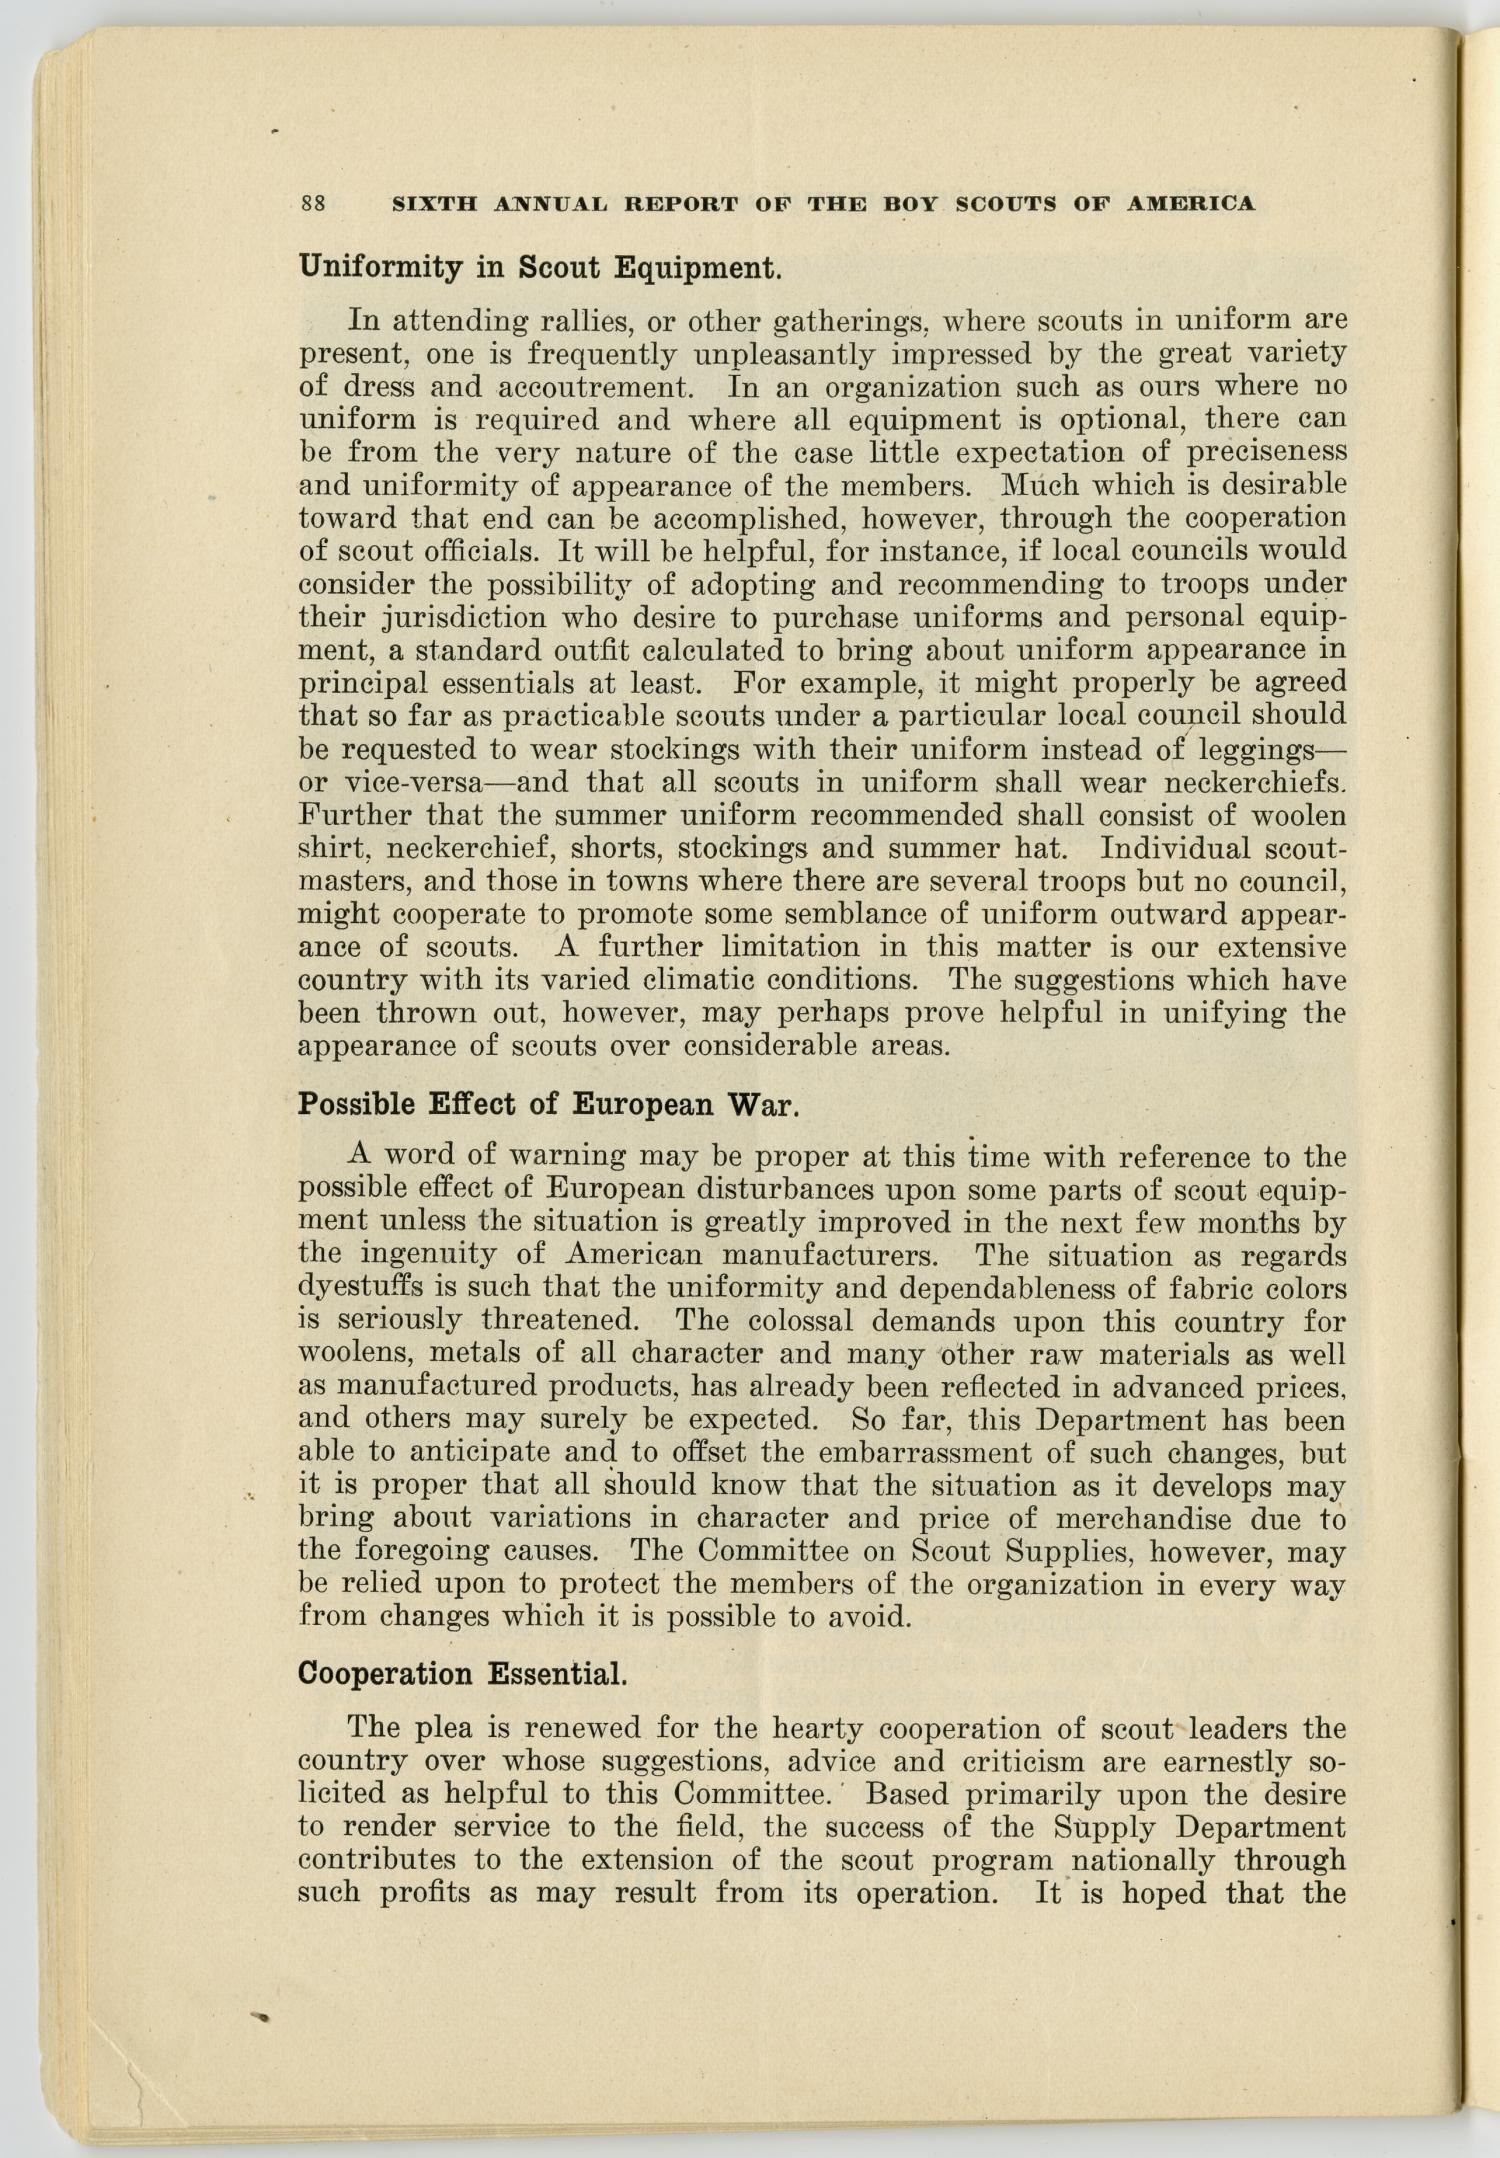 Scouting, Volume 3, Number 22, April 1, 1916
                                                
                                                    88
                                                